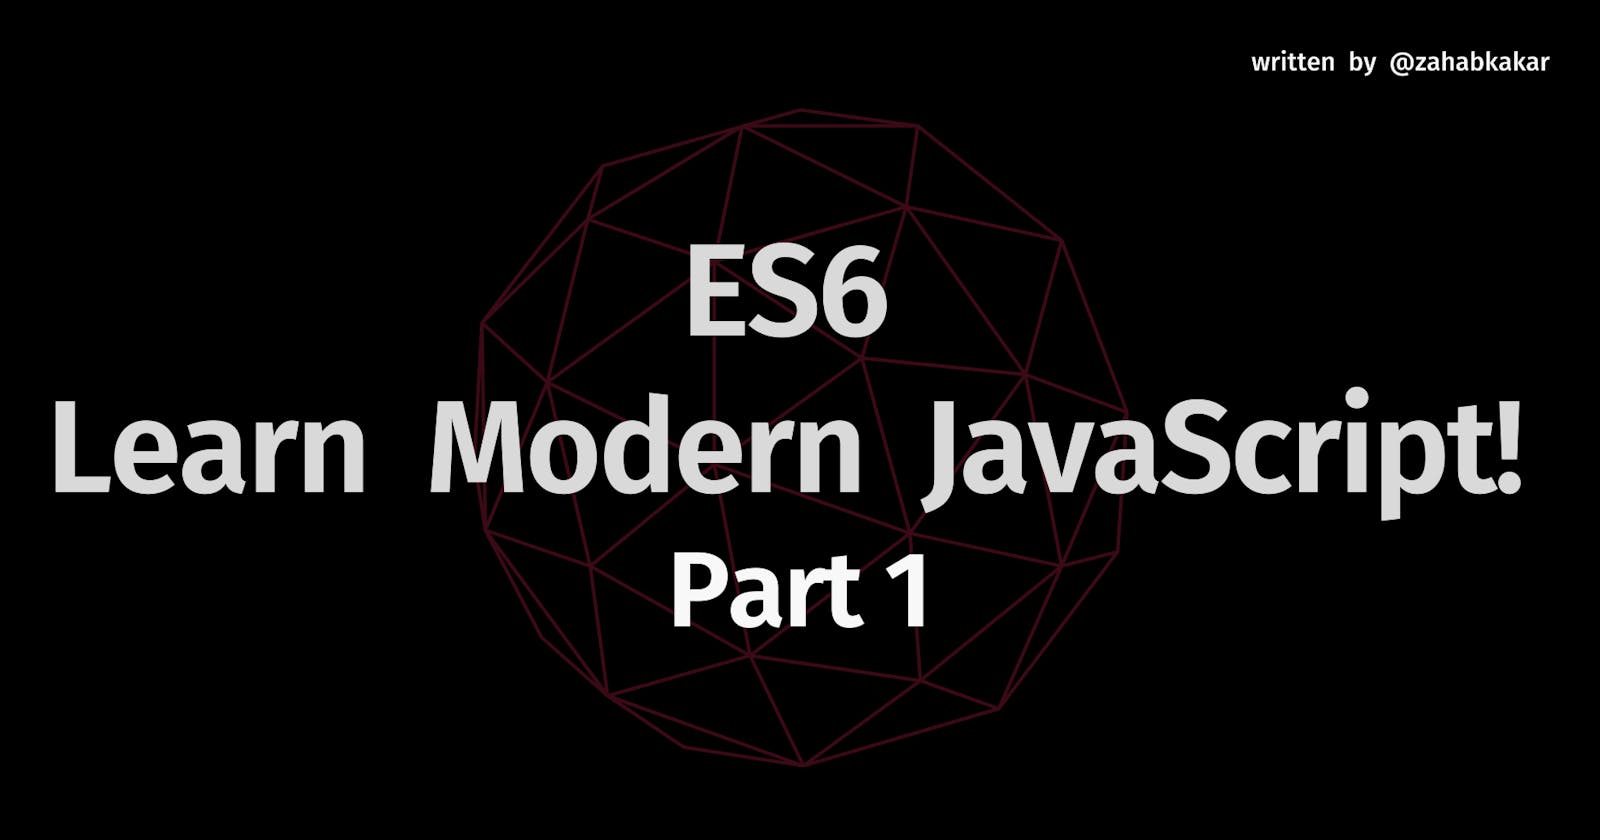 ES6
Learn Modern JavaScript!
Part 1